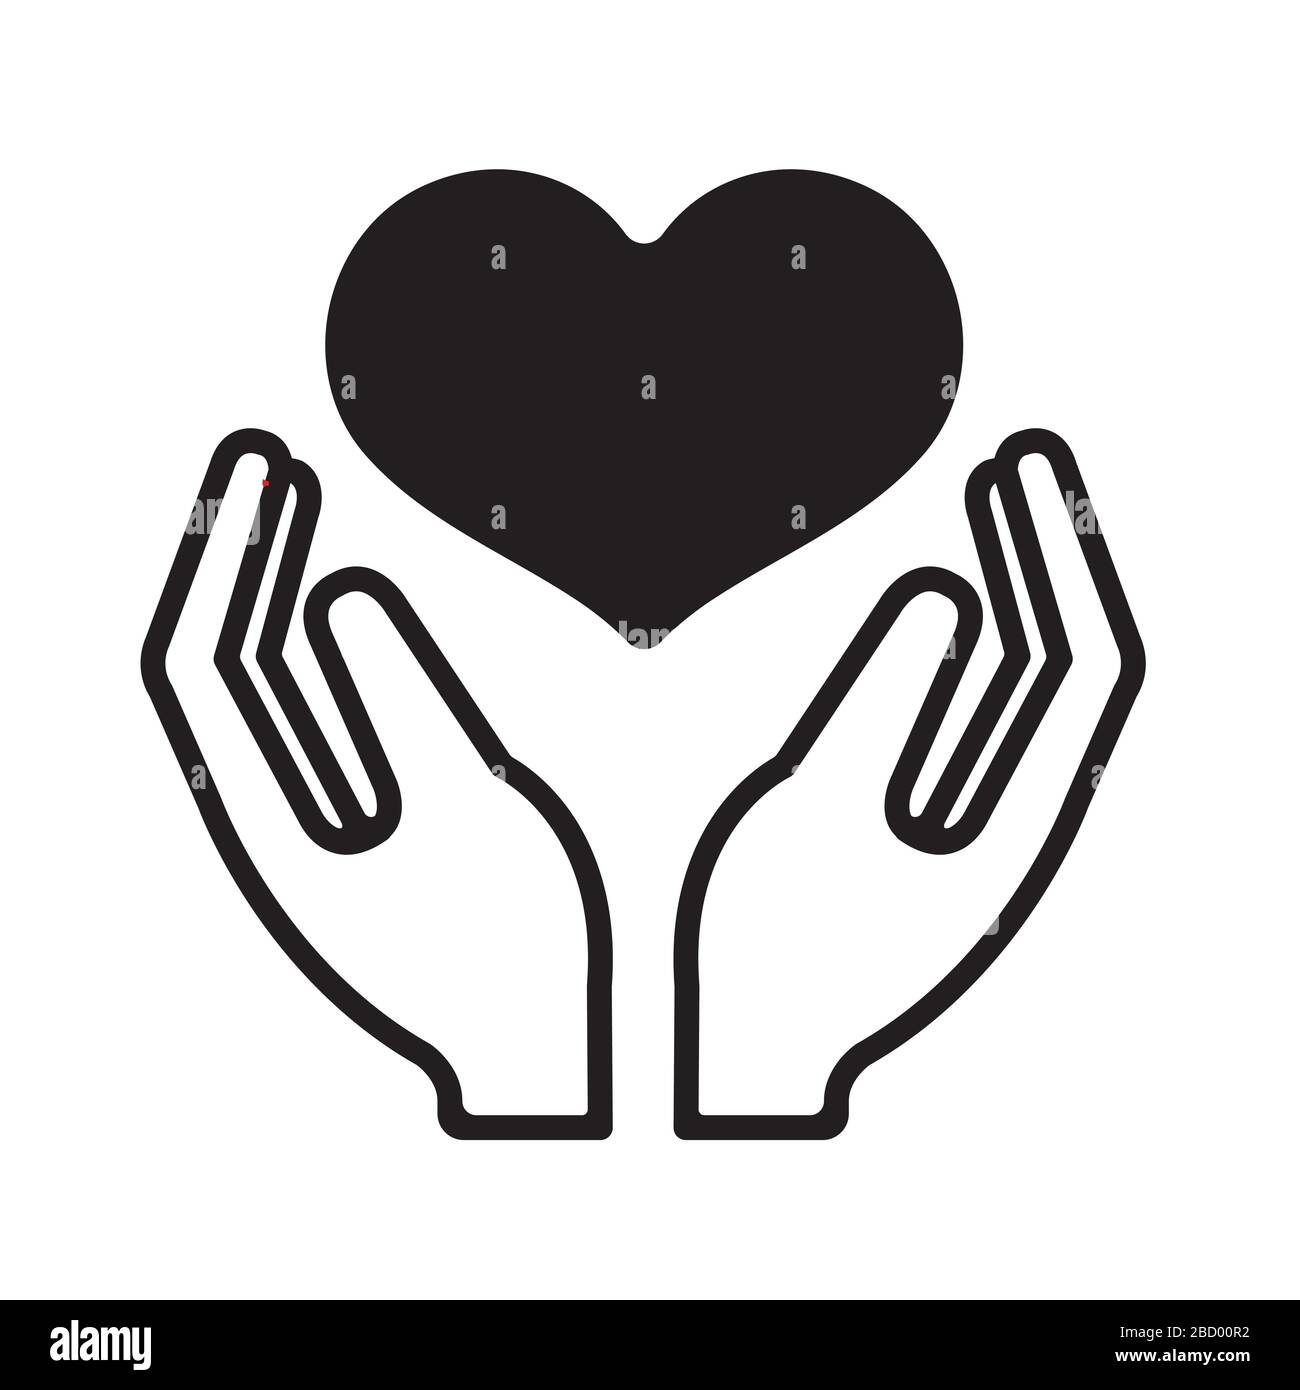 love, support, compassion, care vector icon Stock Vector Image & Art ...